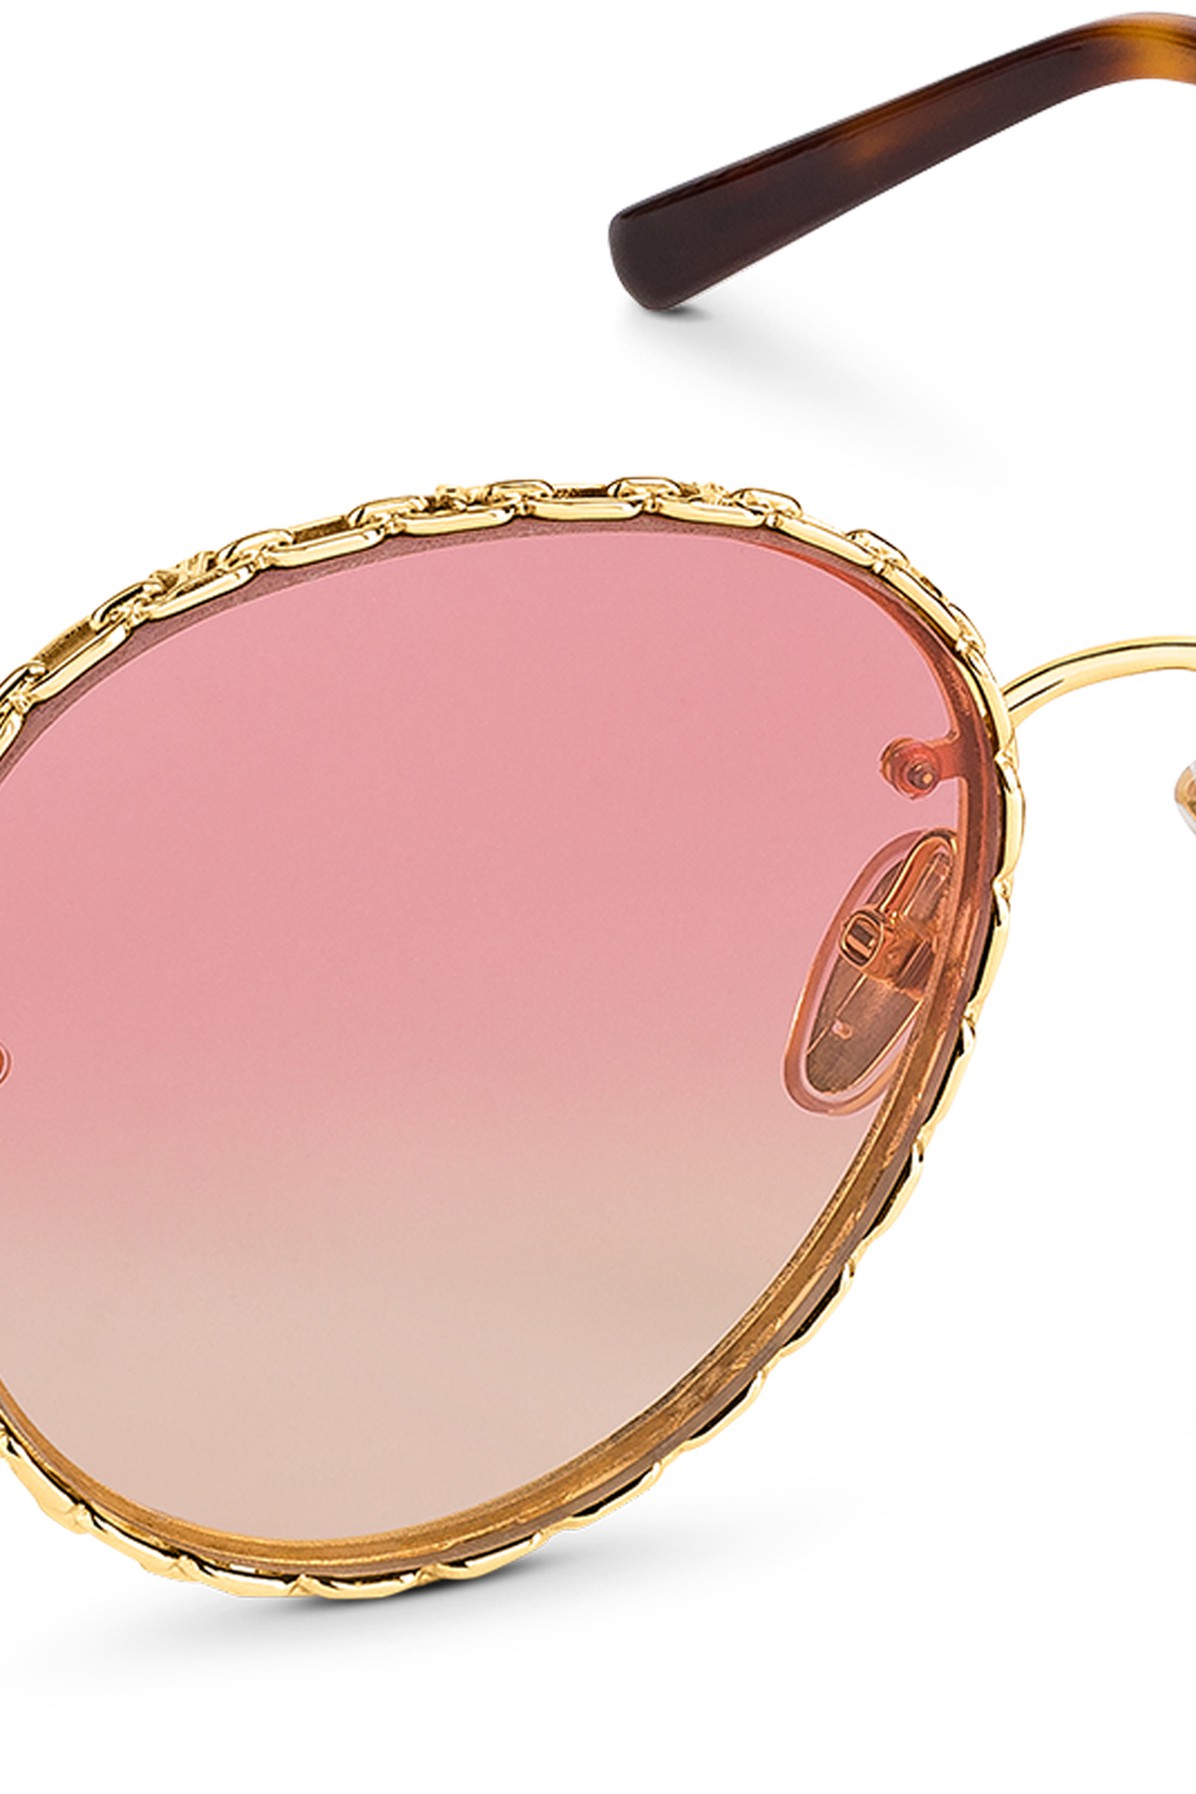 Louis Vuitton Lv Ring Round Sunglasses In Rose